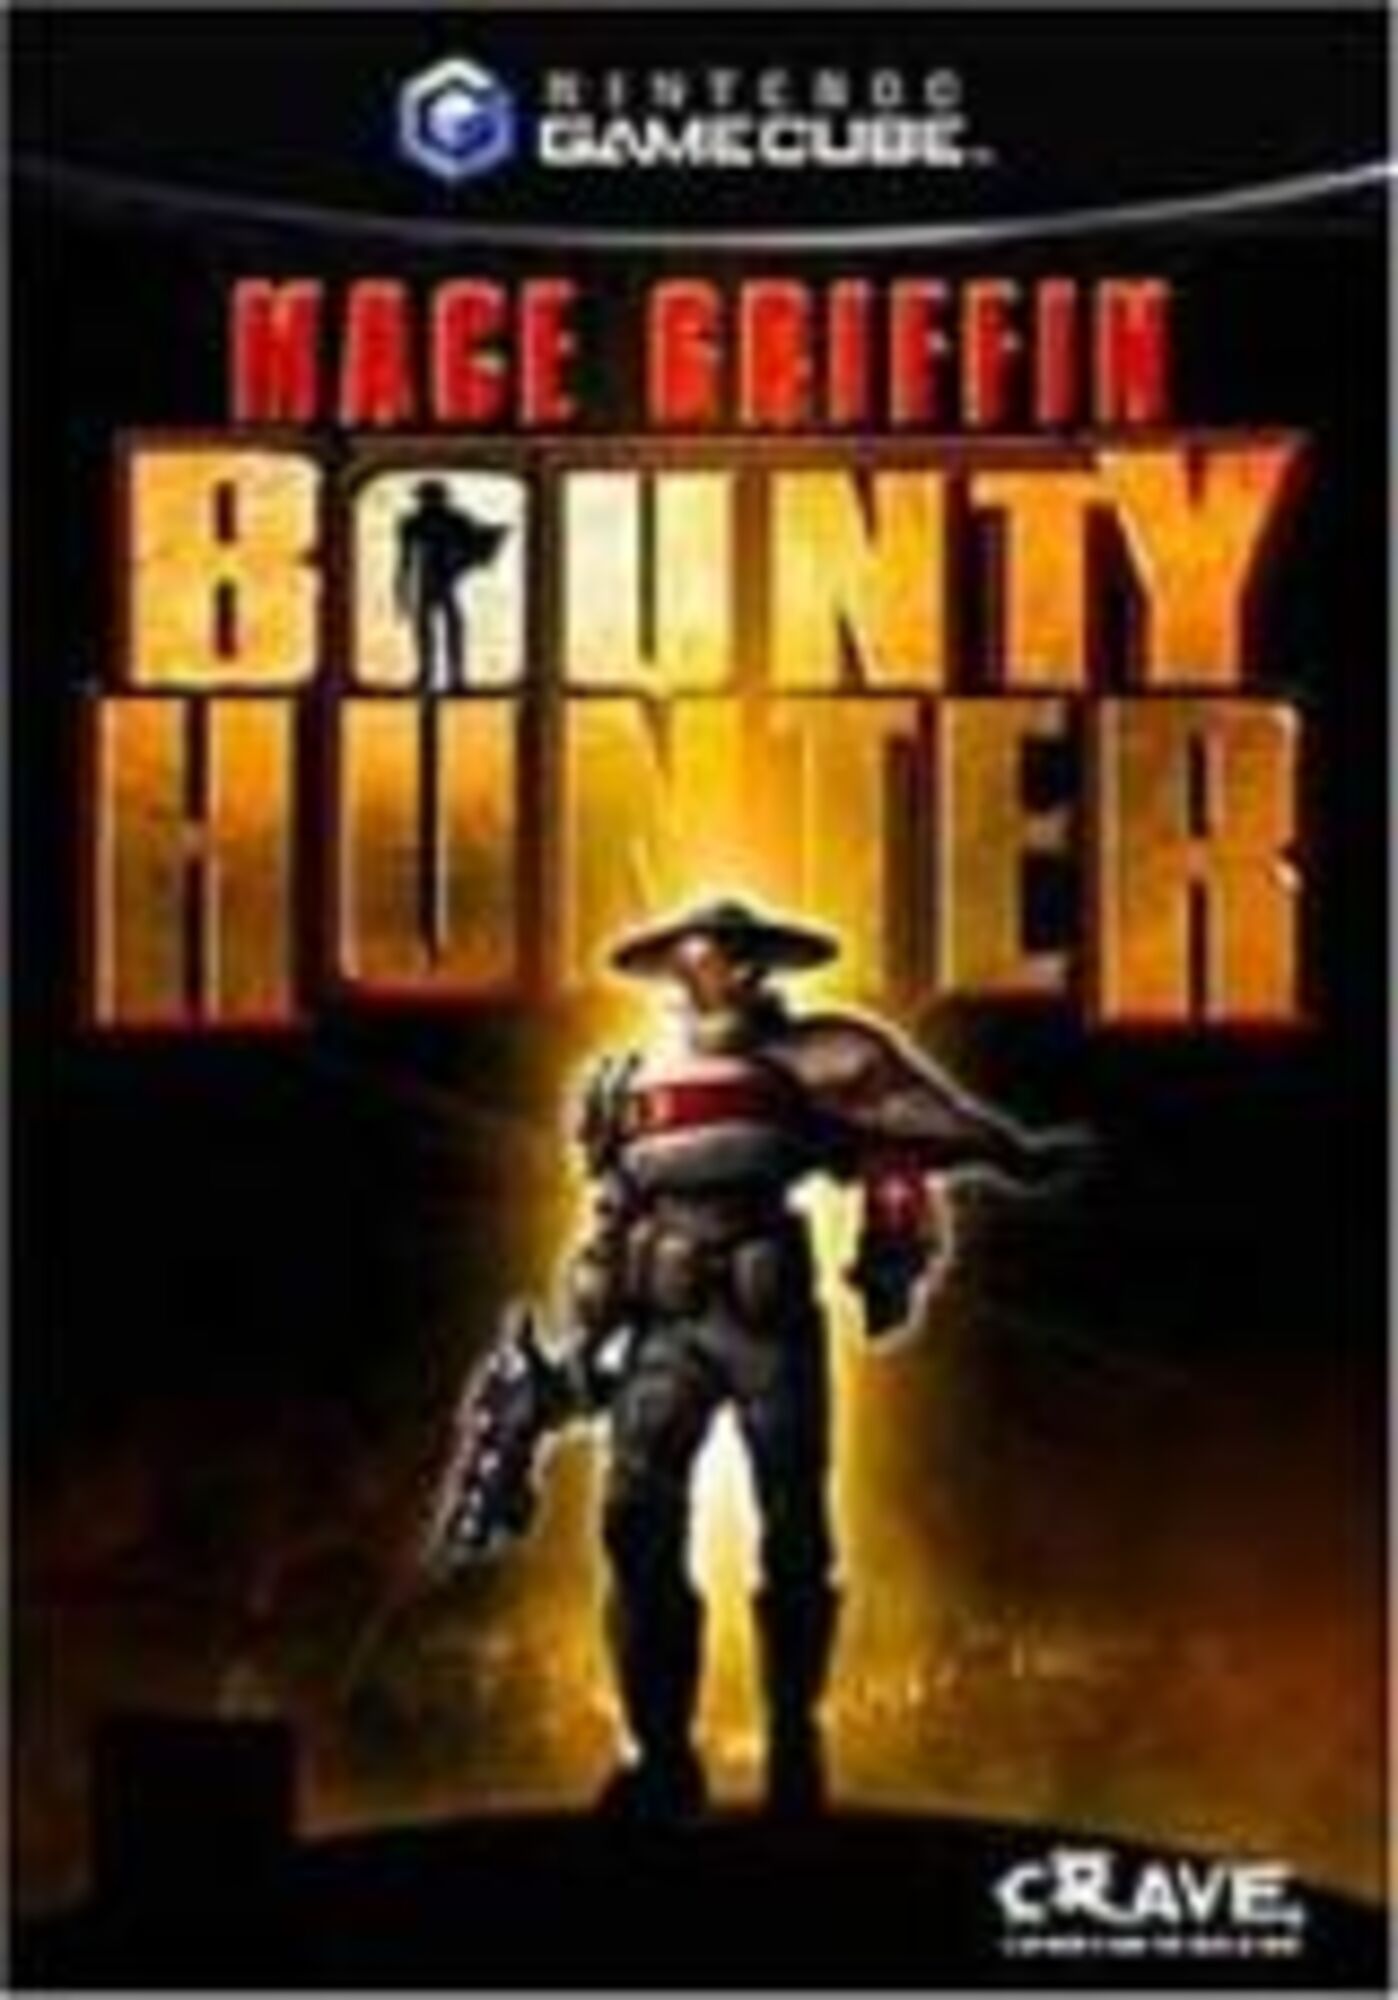 mace griffin bounty hunter pc